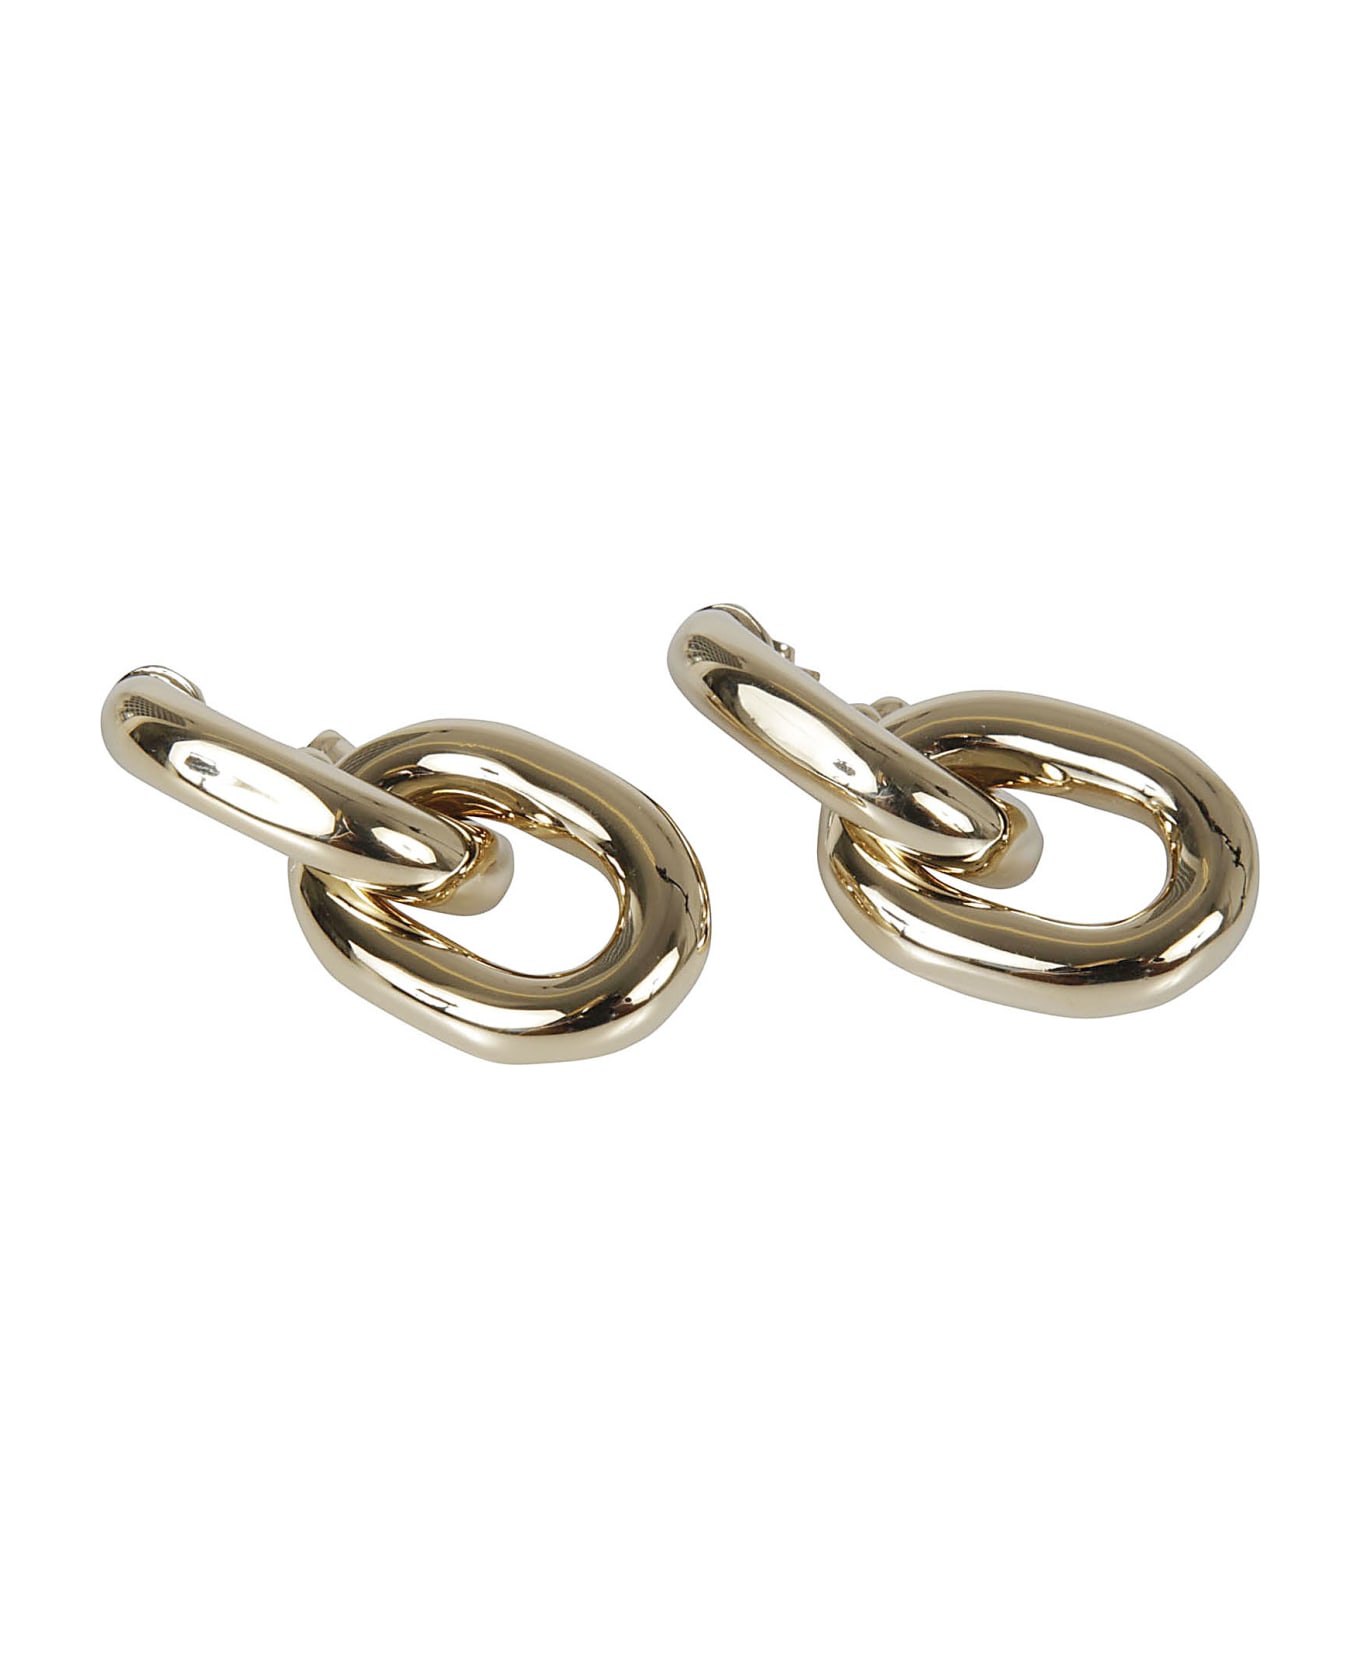 Paco Rabanne Xl Link Hoops Earrings - GOLD